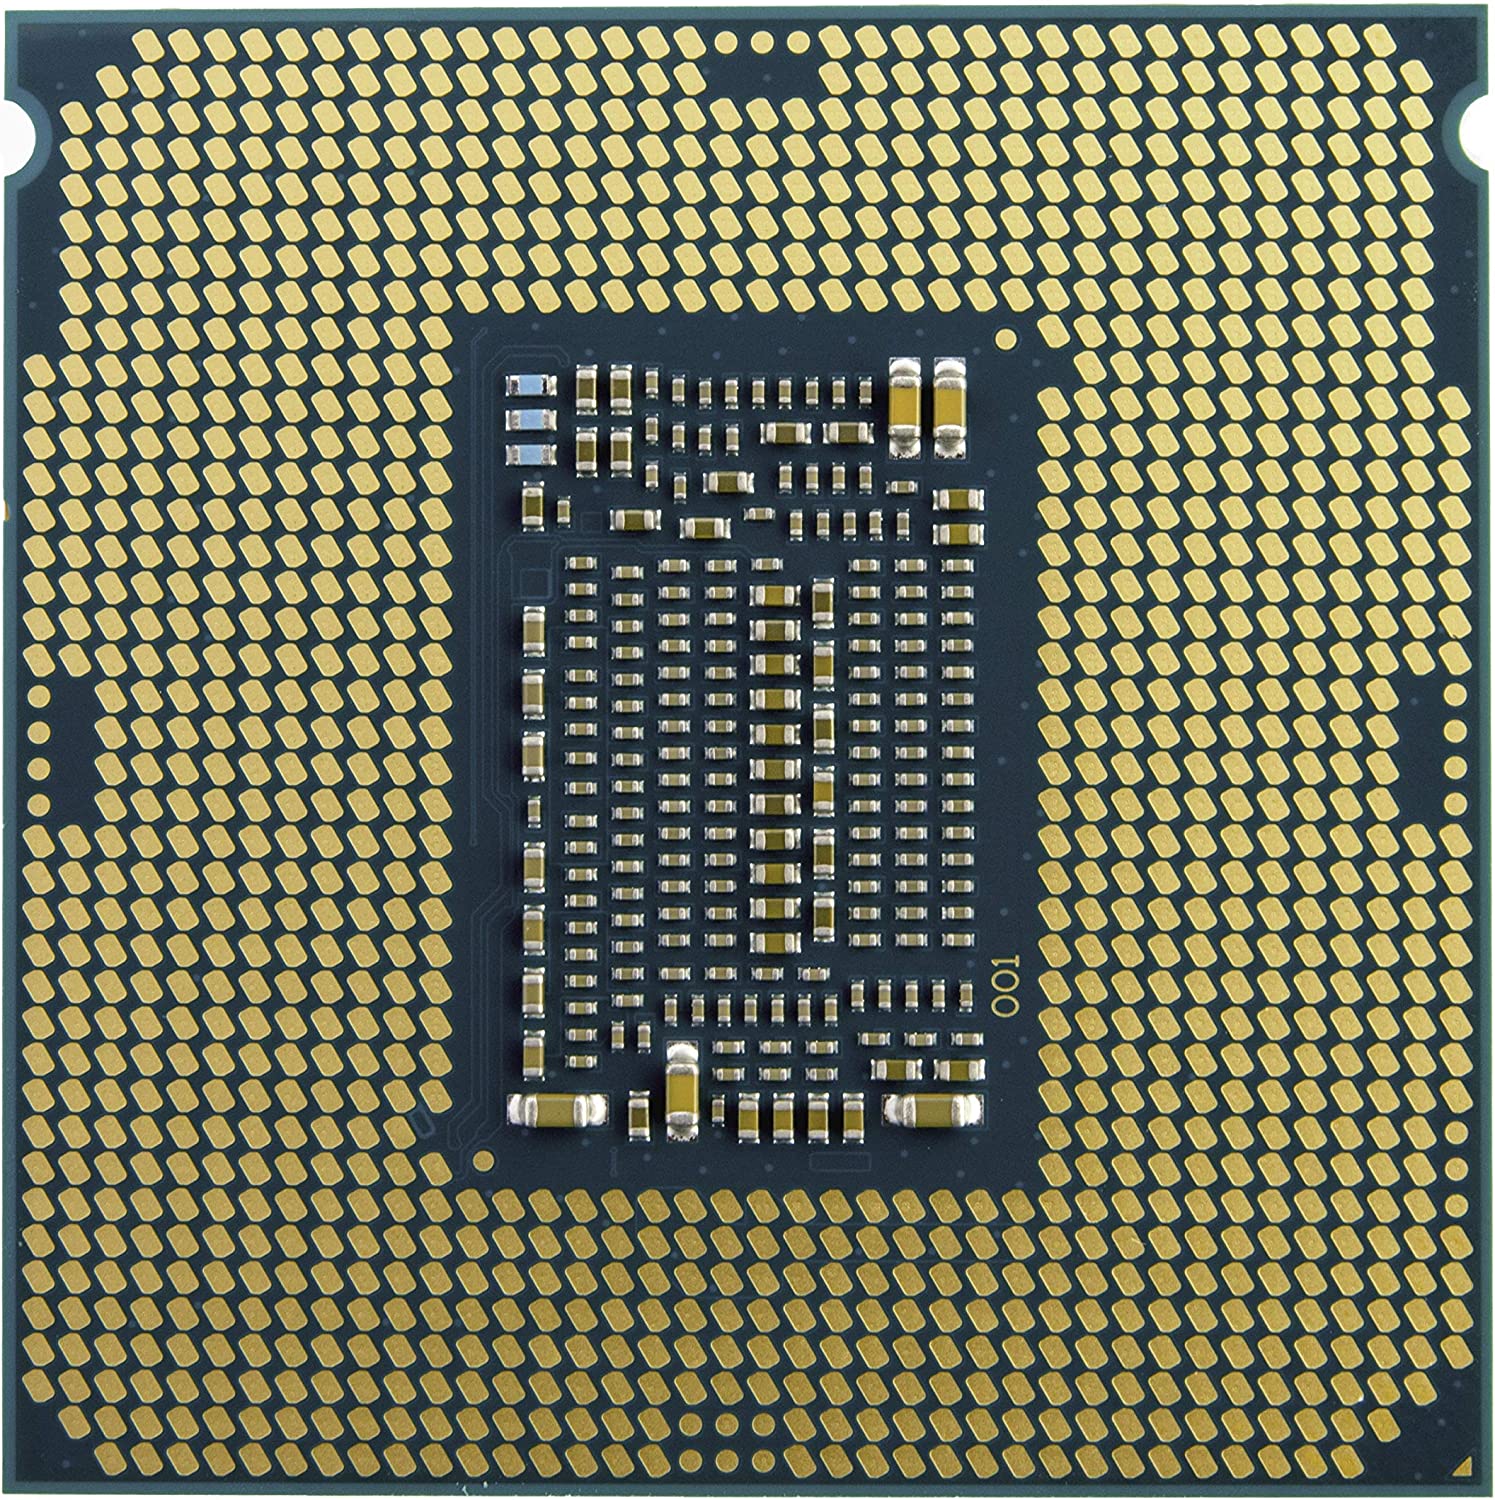 Intel Core i3-10100 Desktop Processor 4 Cores up to 4.3 GHz